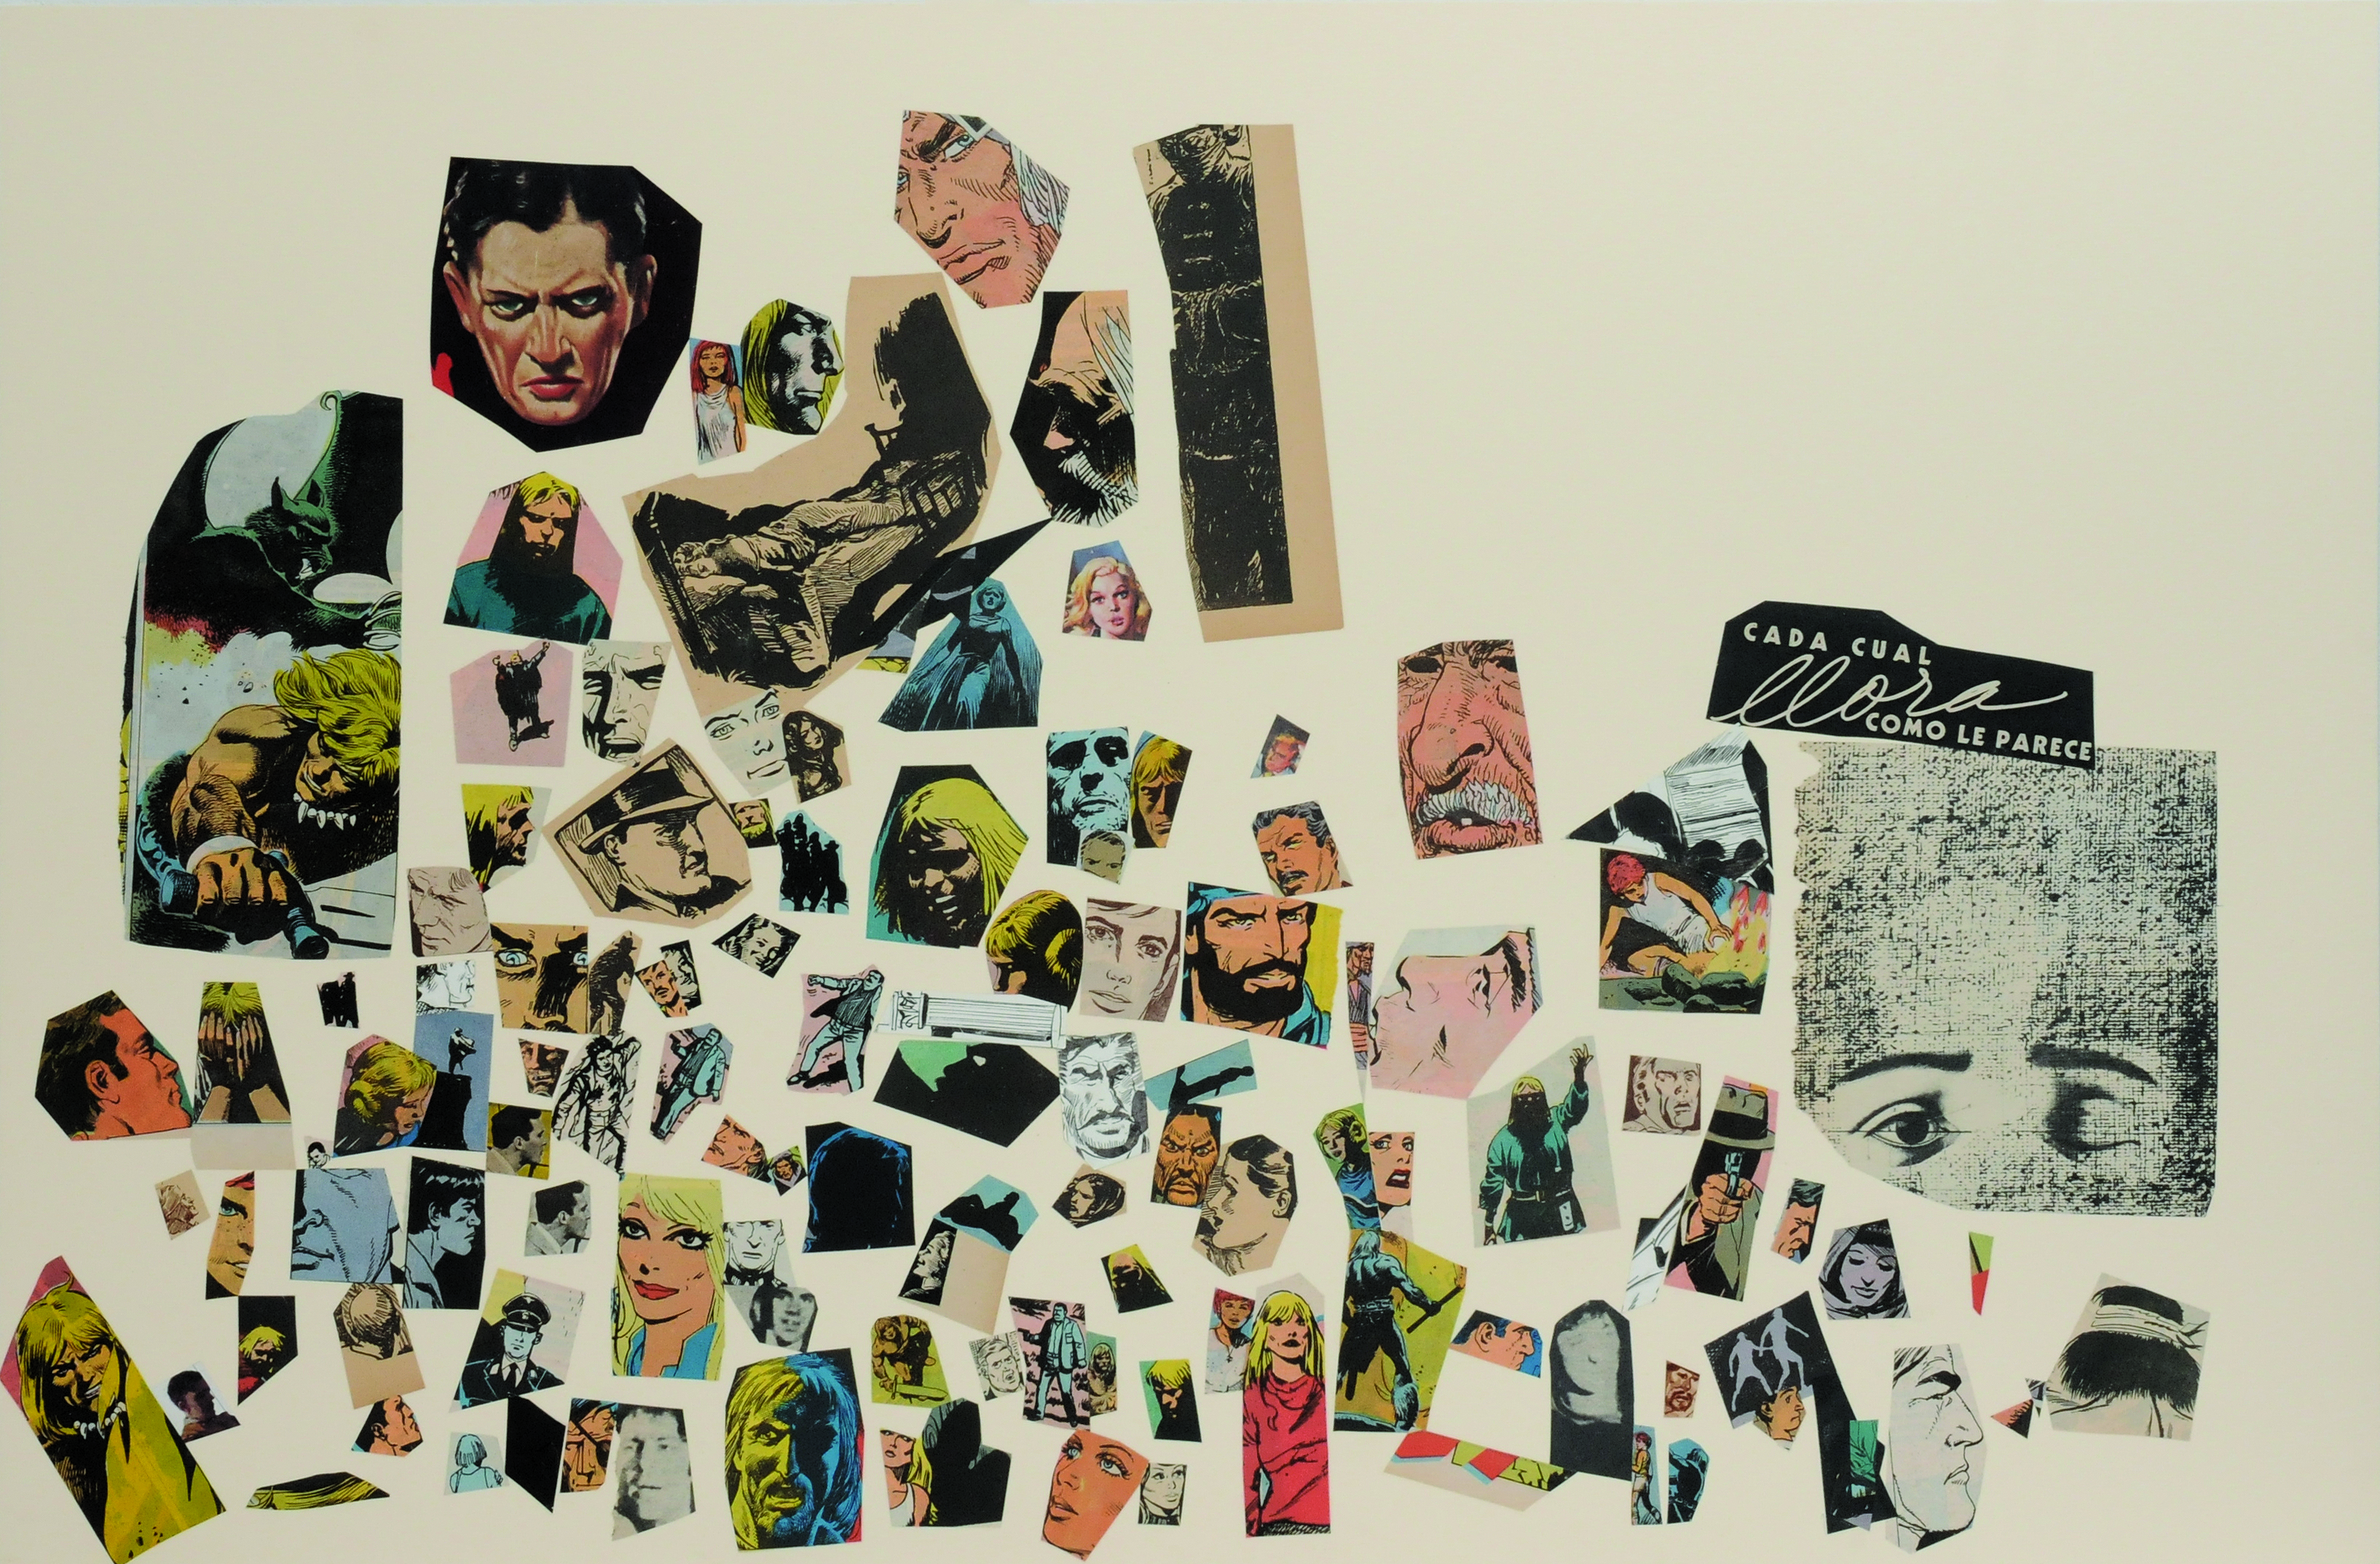 Cada cual llora como le parece, papel collage, 51 cm x 76 cm. 2008